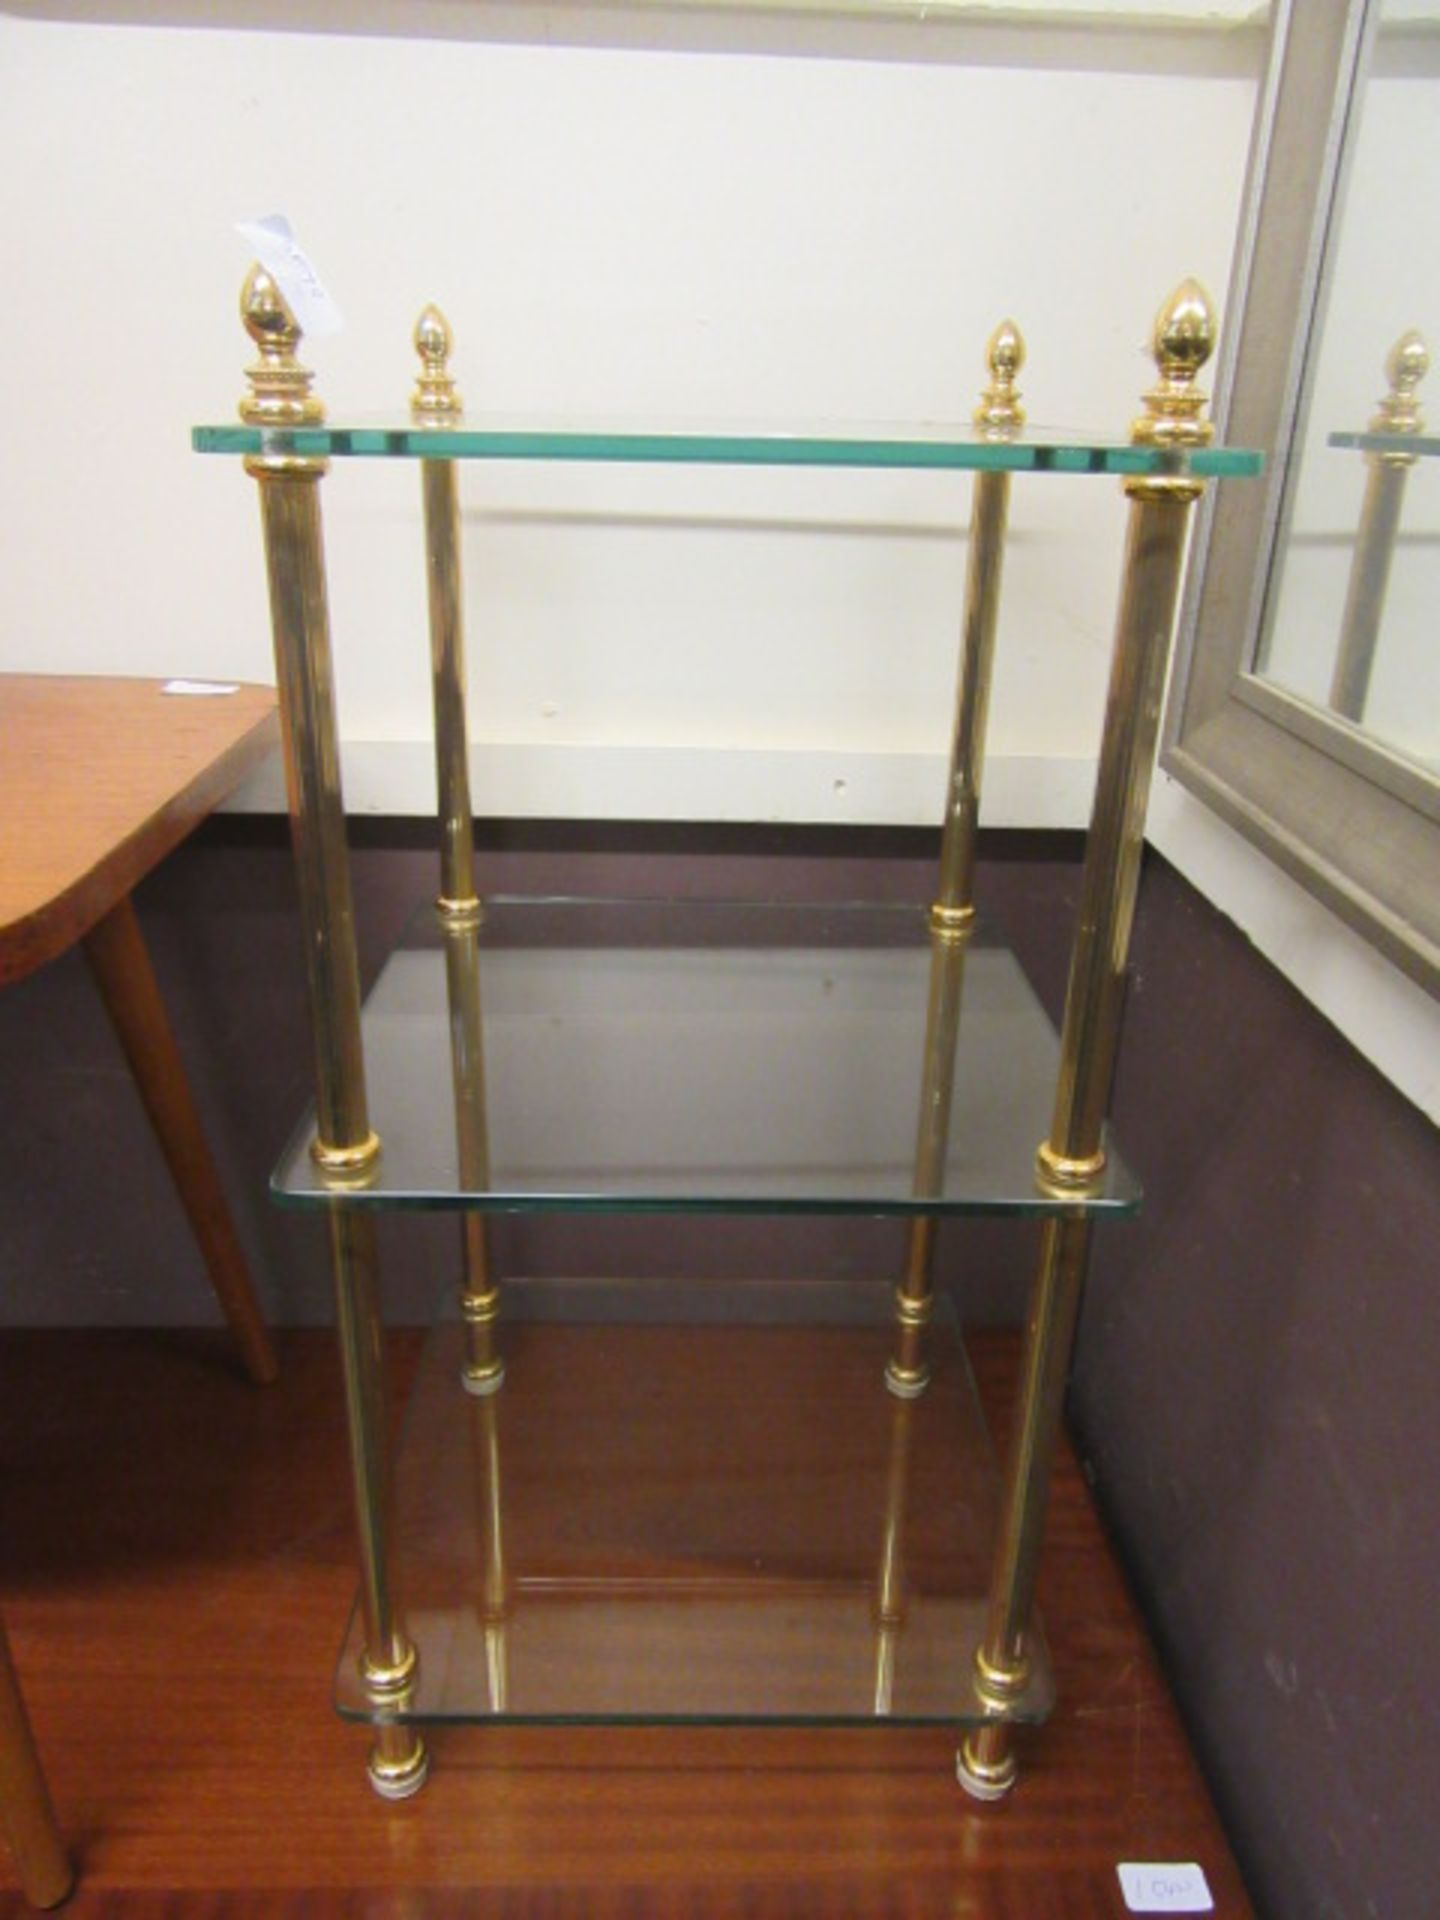 A modern three tier glass and gilt metal stand